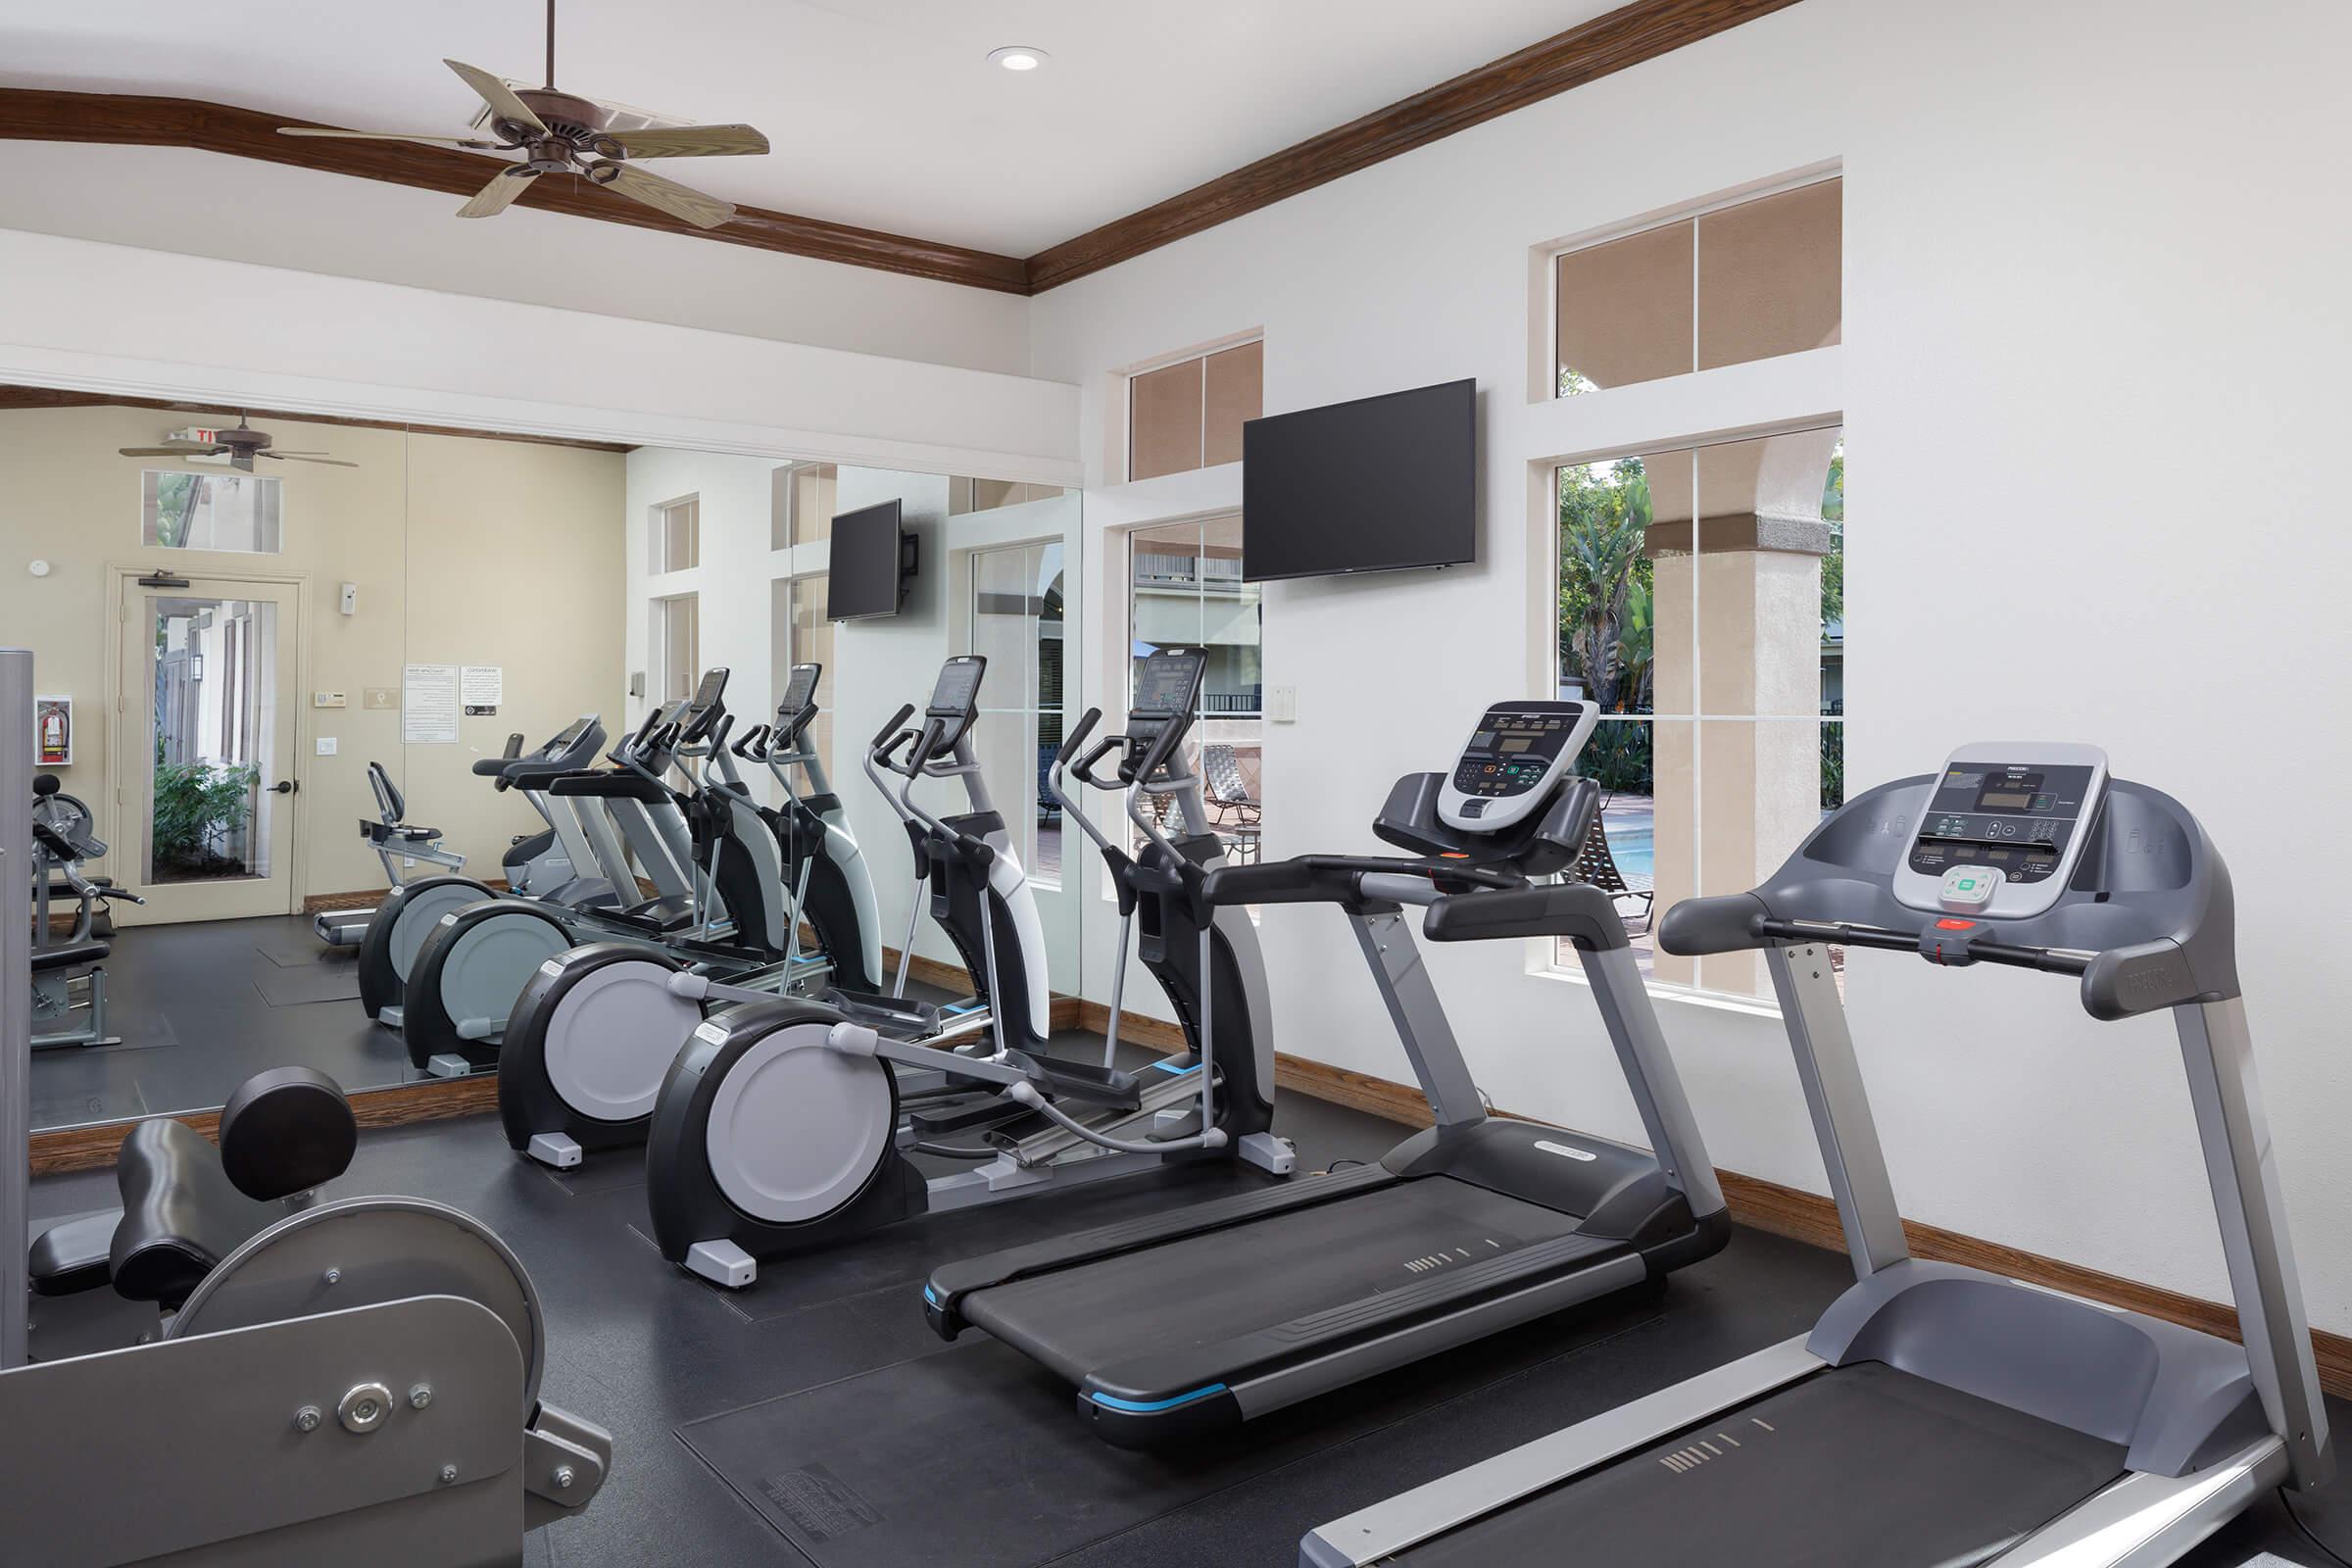 Laurel Glen Apartment Homes provides a fitness center